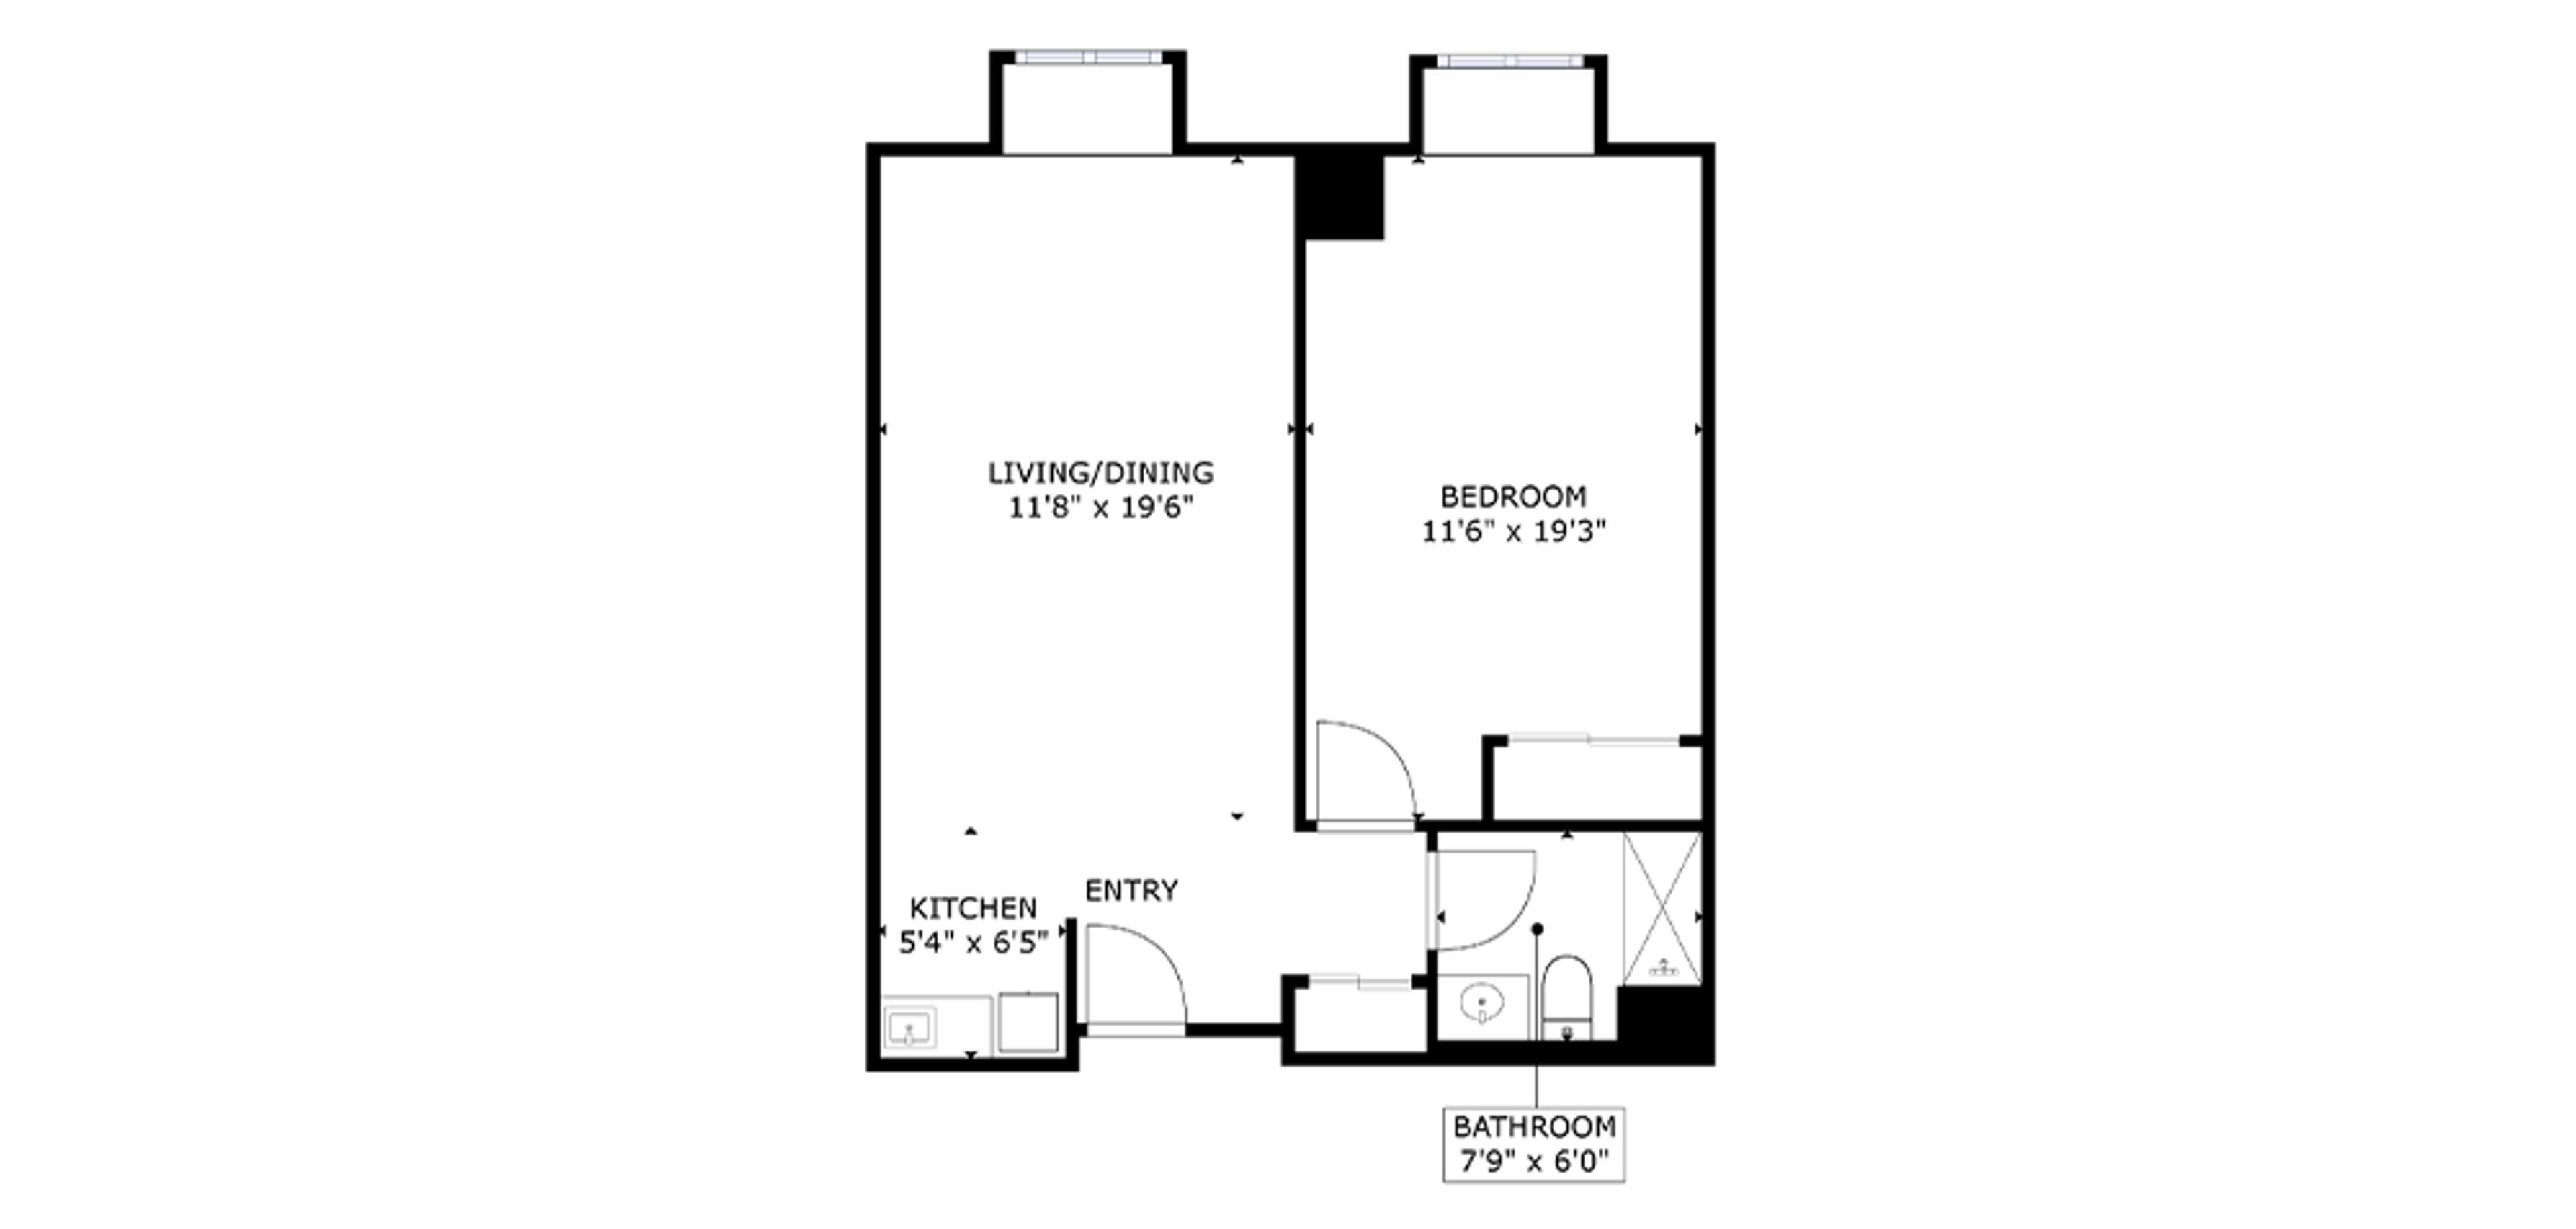 Birkdale Place Sample 1 Bedroom Plan C